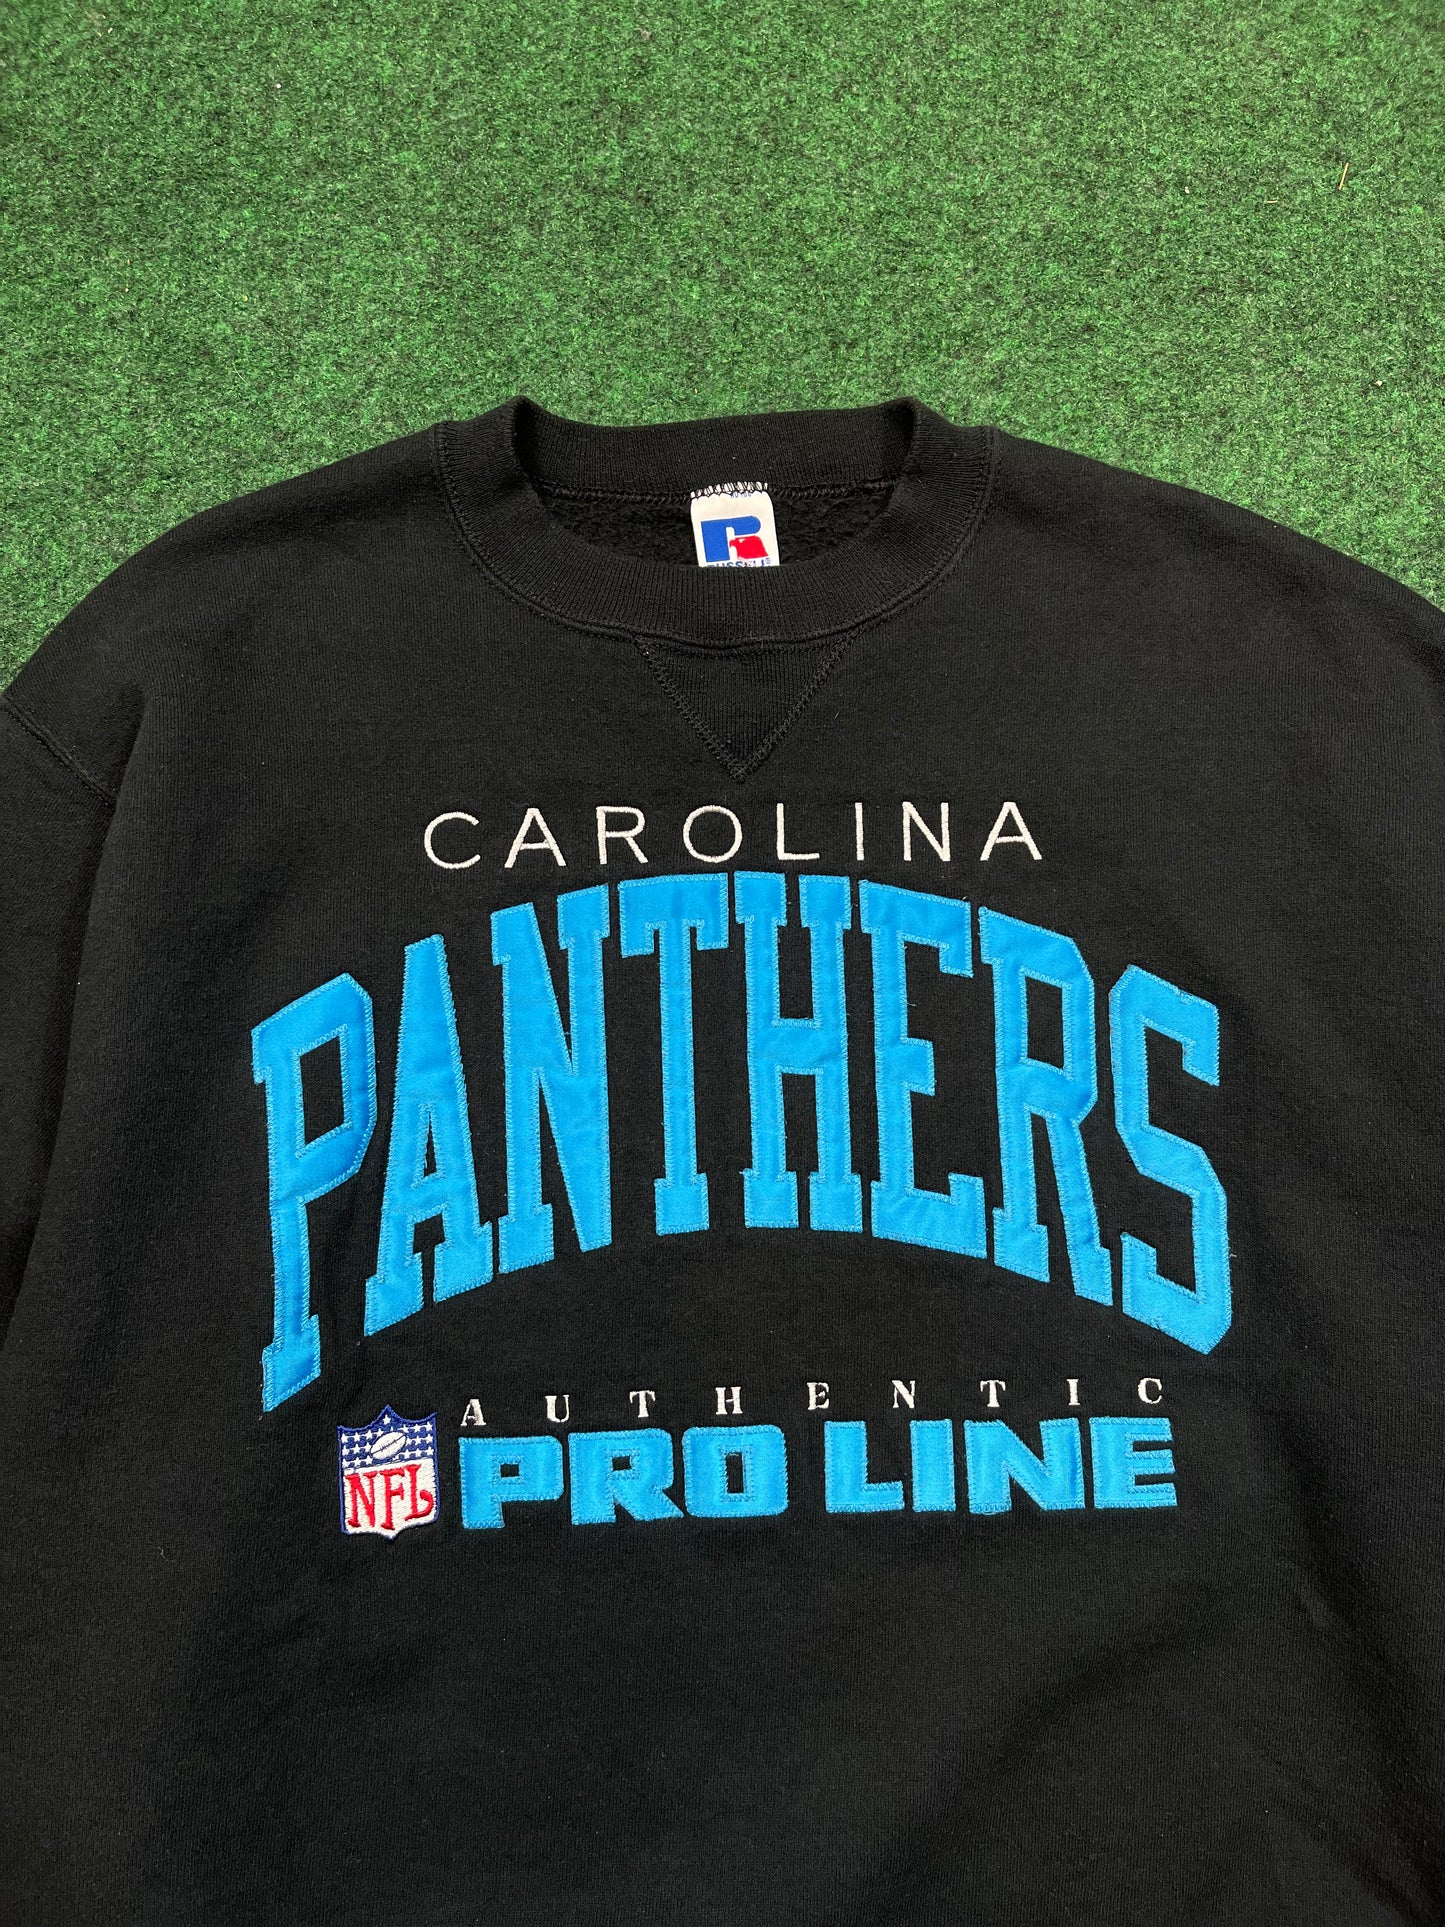 90’s Carolina Panthers Vintage Embroidered Russell Athletic Pro Line NFL Crewneck (Large)